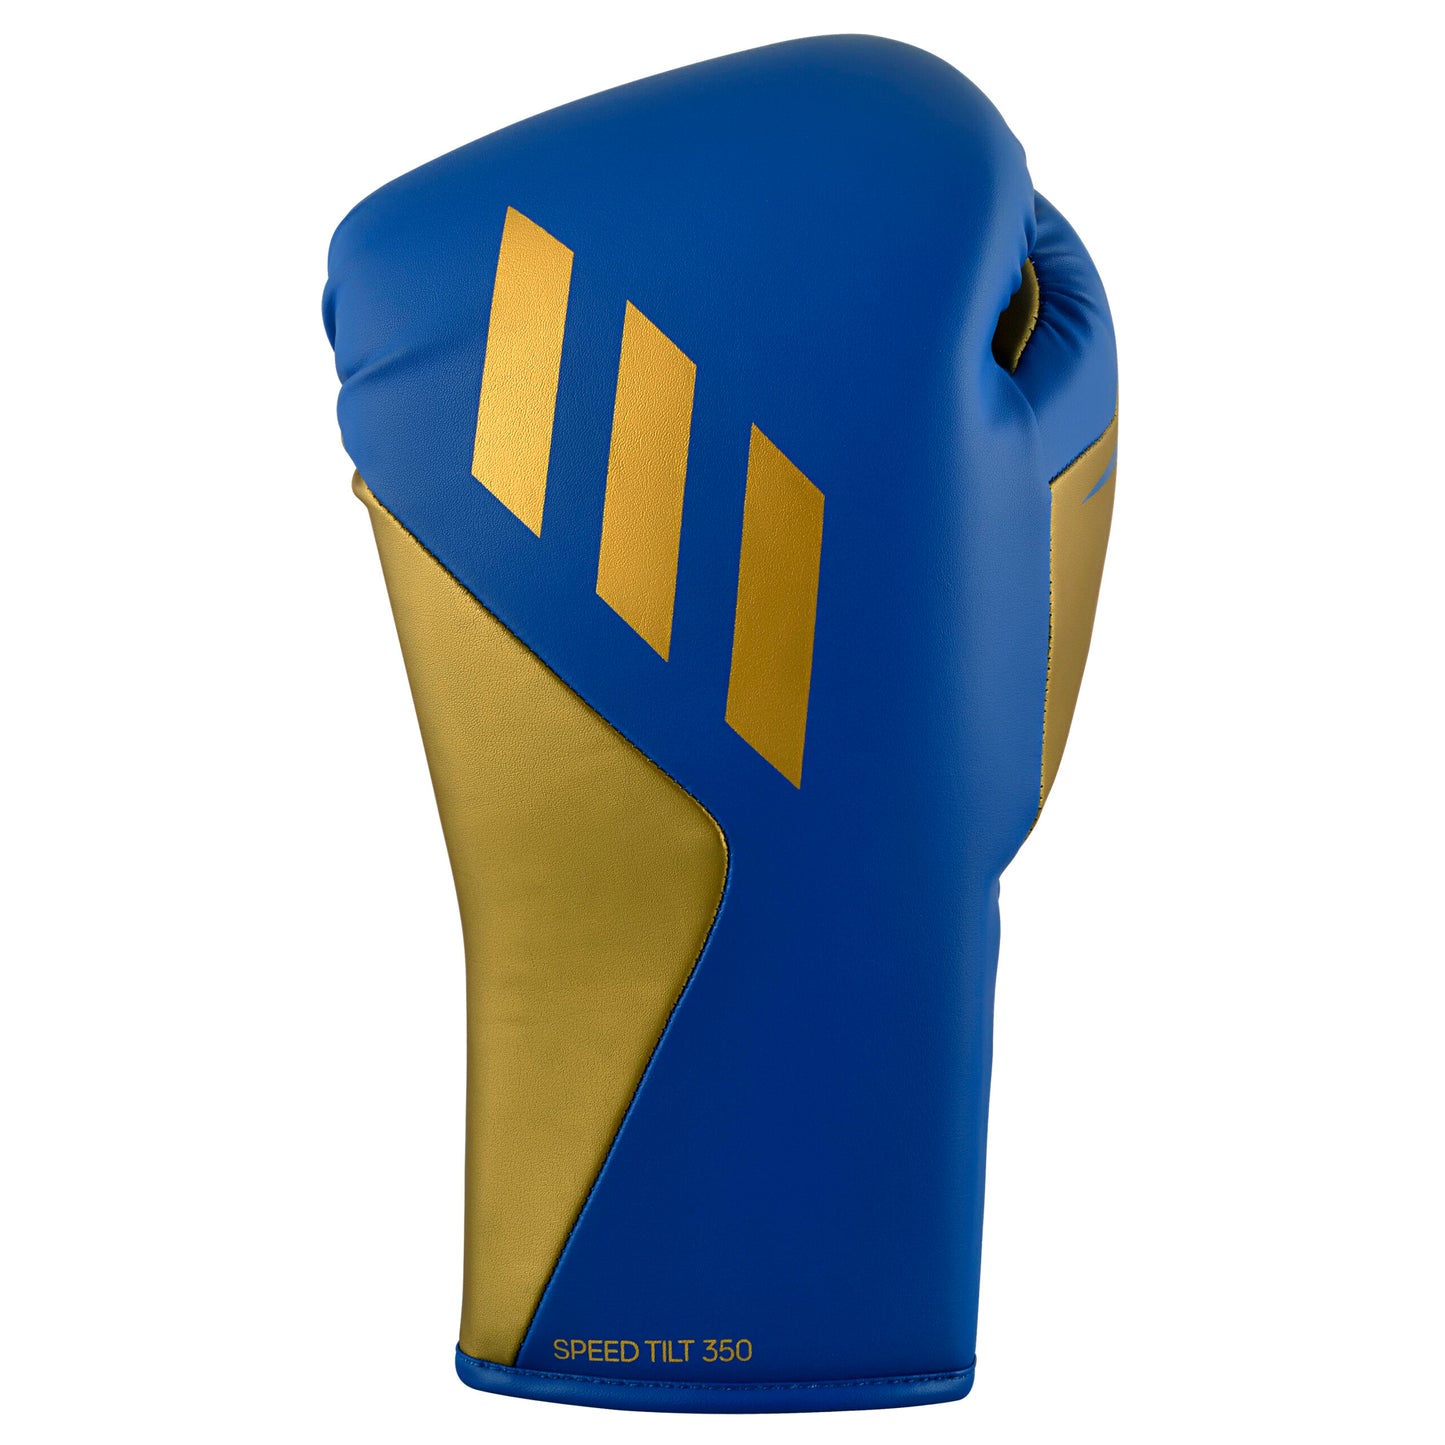 Adispd350tg Adidas Tilt 350 Pro Training Boxing Gloves Blue Gold 02